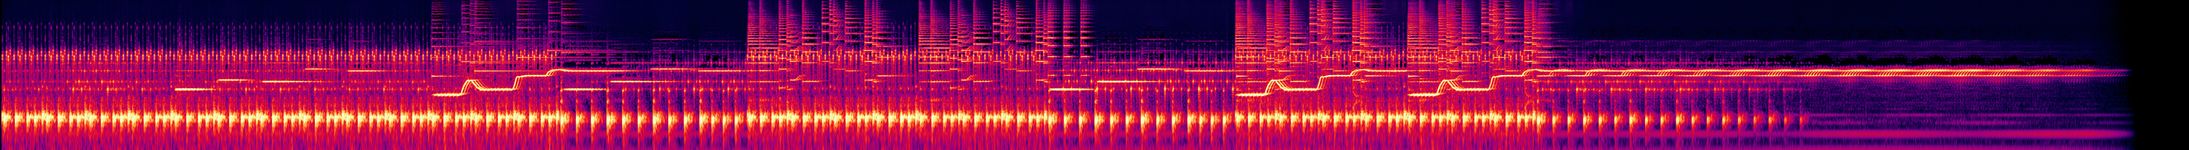 Way Out - Spectrogram.jpg